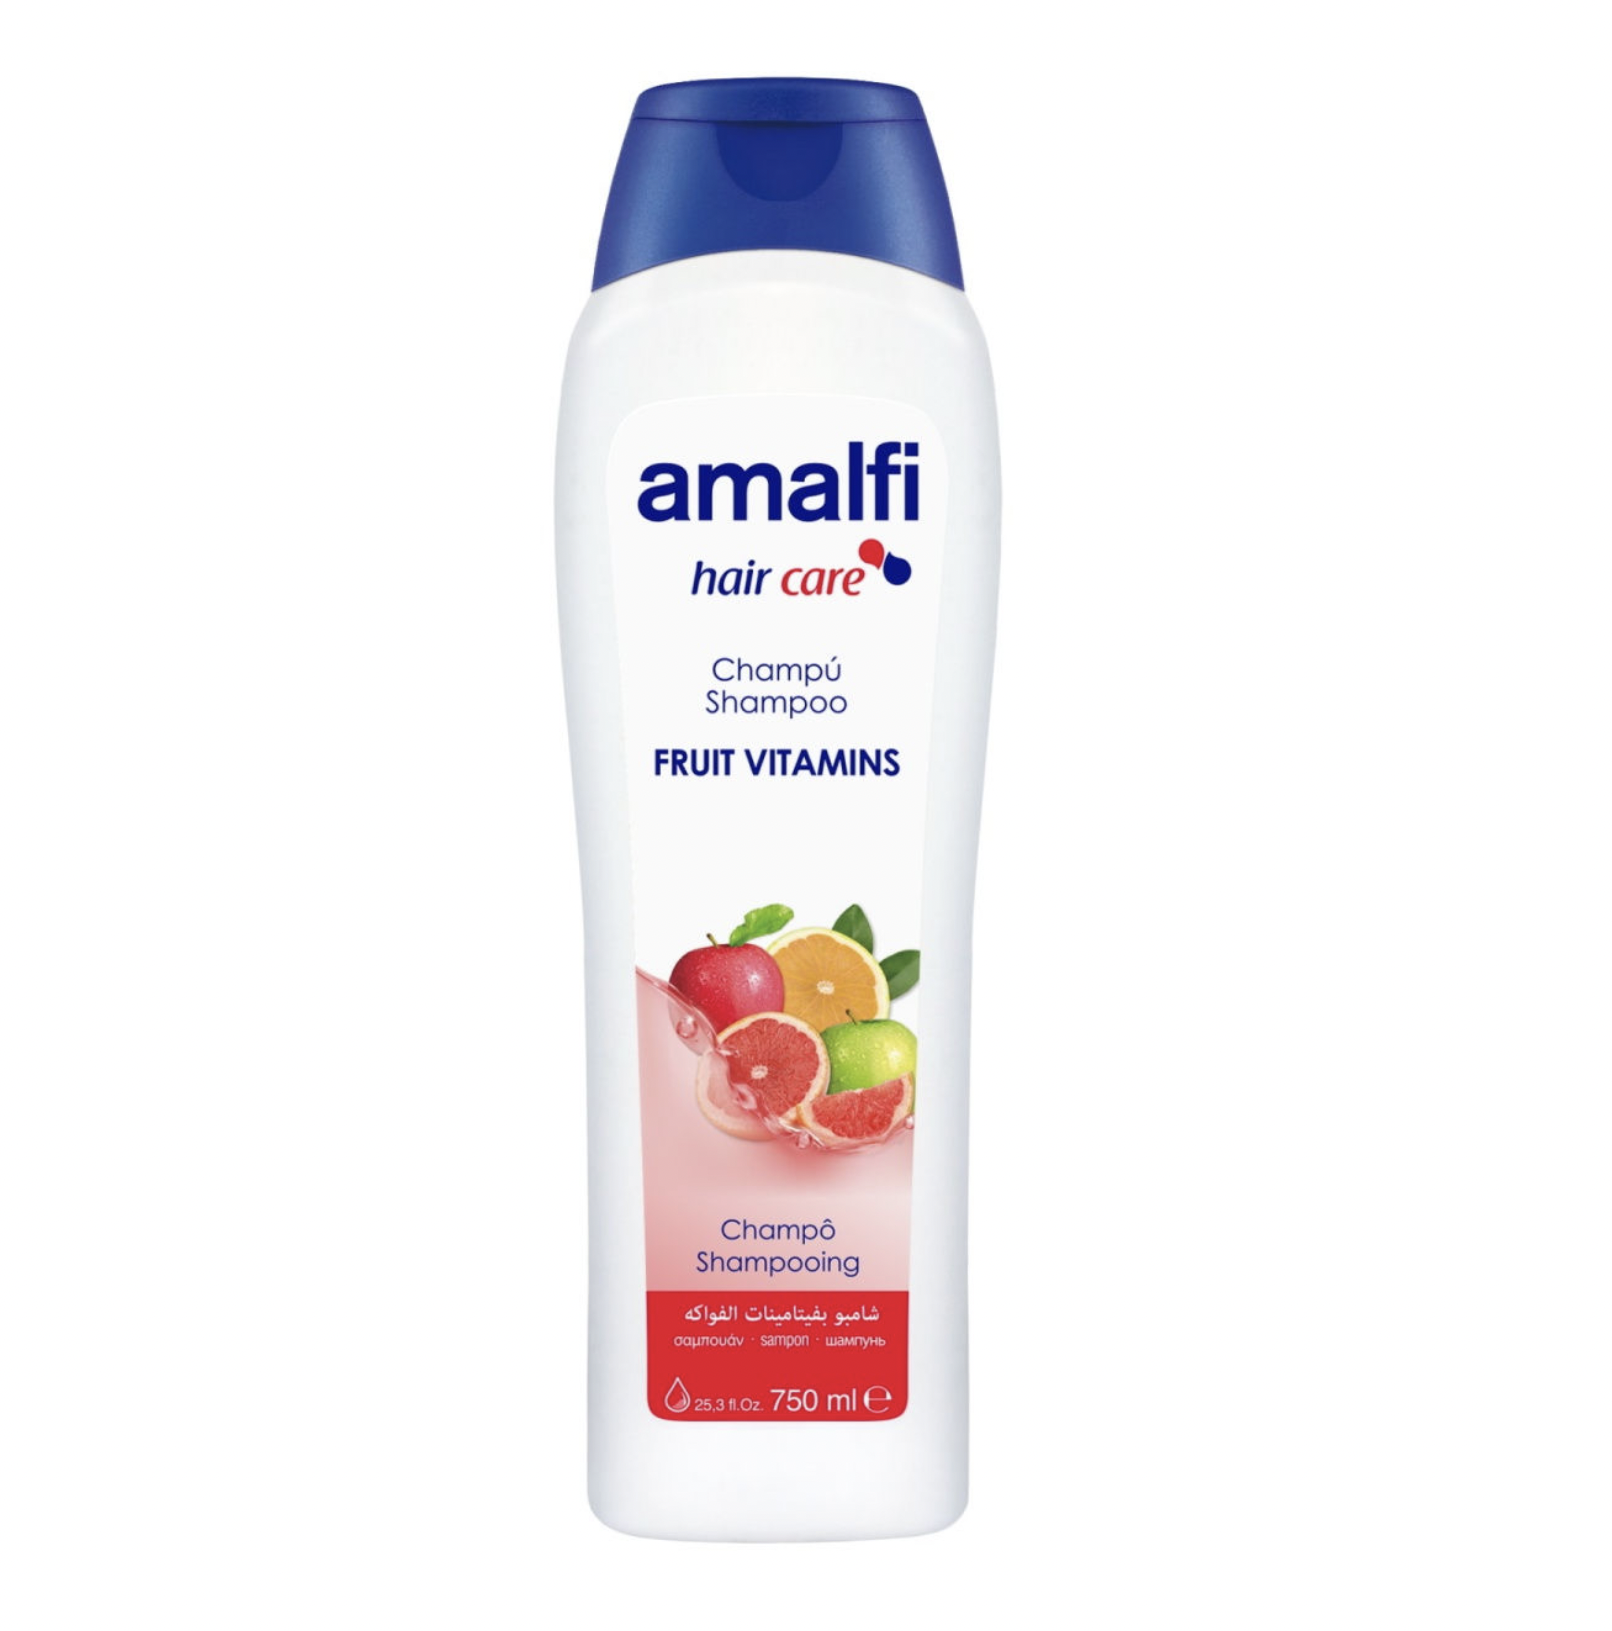   / Amalfi hair care -     Fruit Vitamins 750 